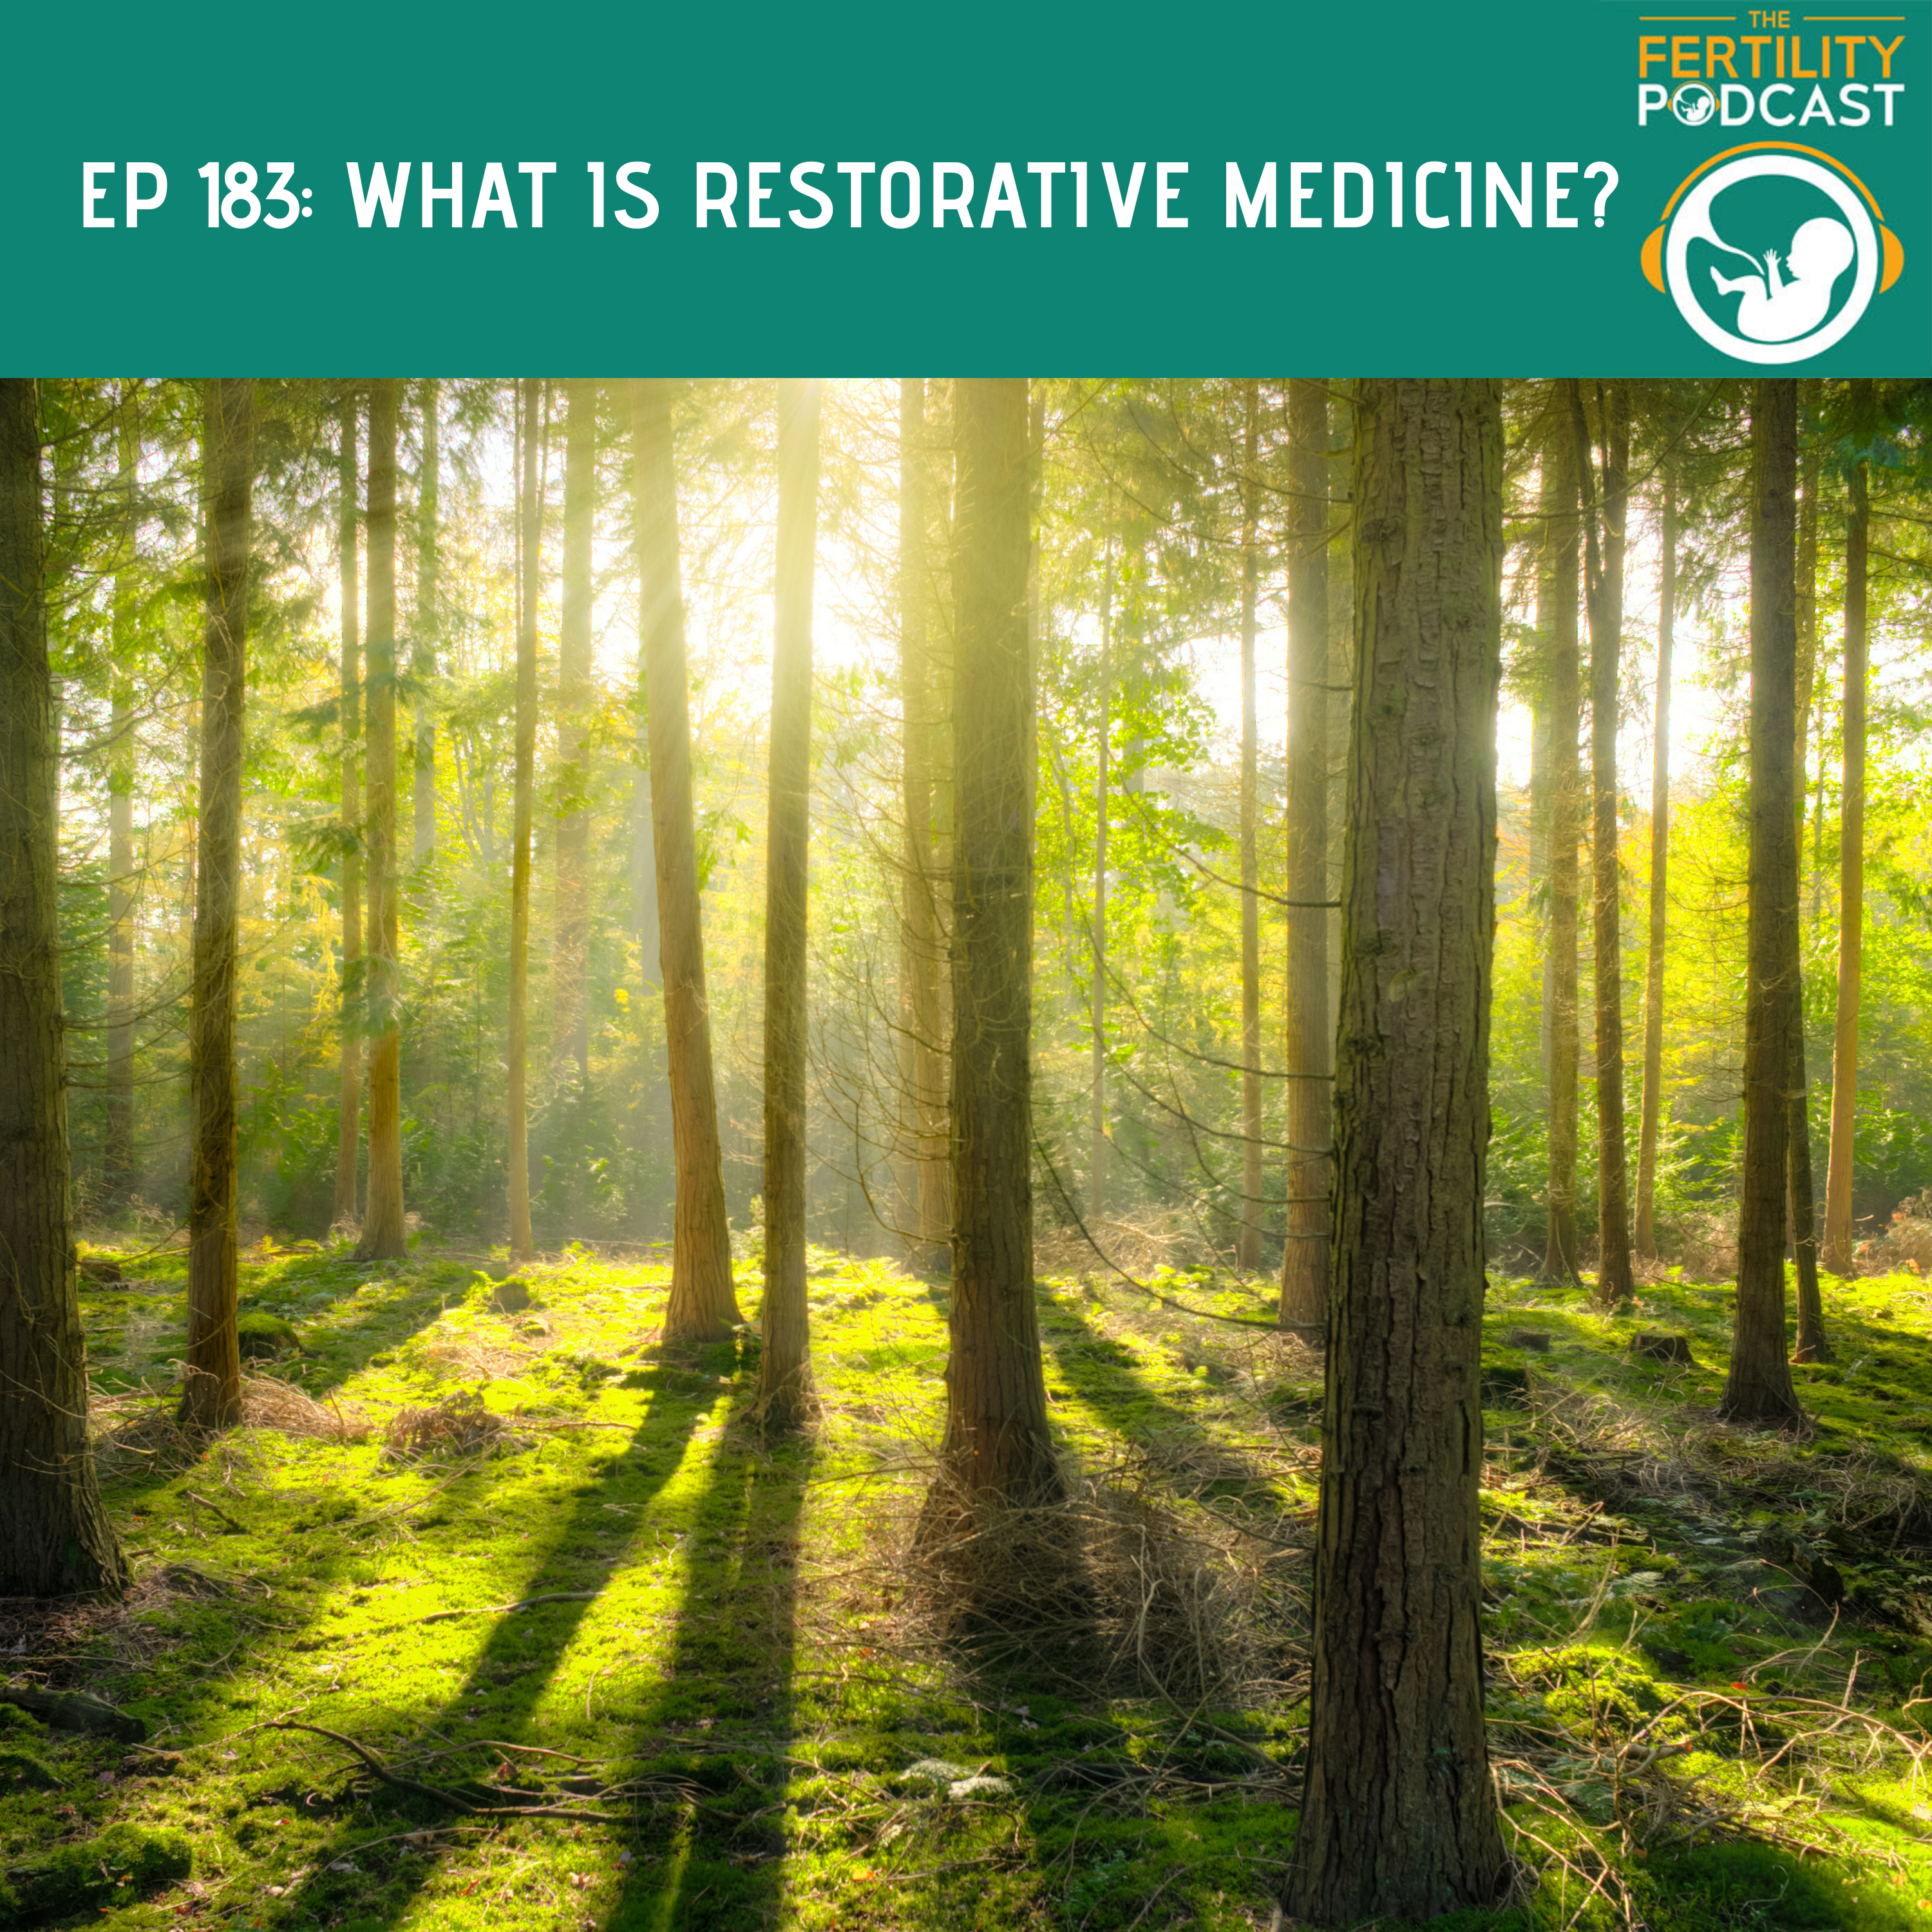 What is Restorative Medicine?